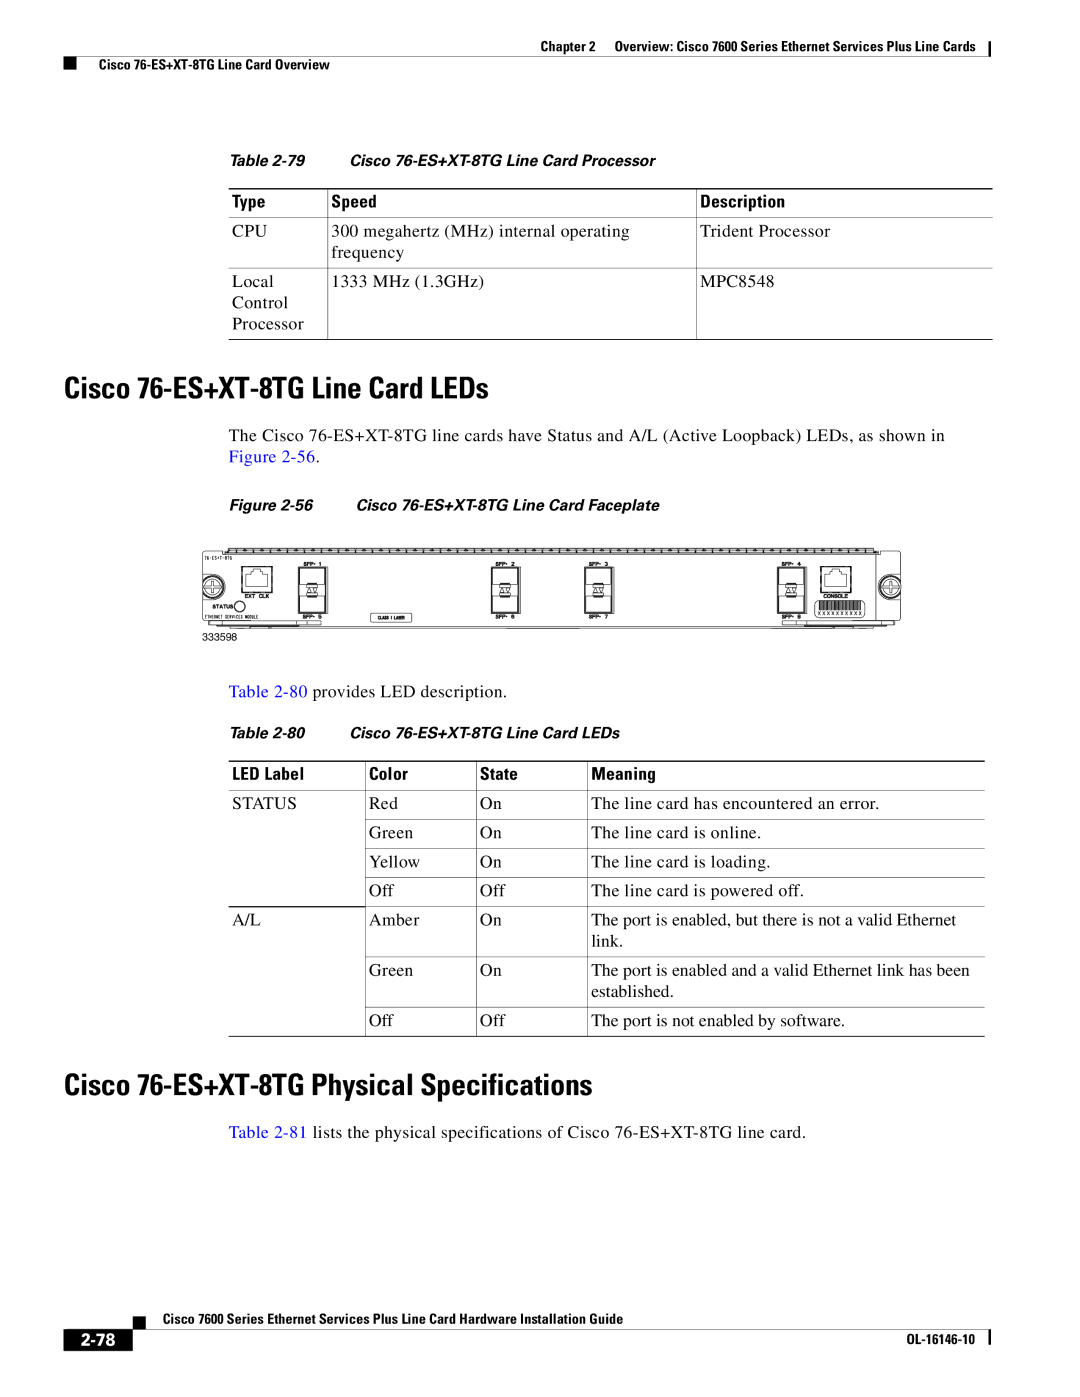 Cisco Systems OL-16146-10 manual Cisco 76-ES+XT-8TG Line Card LEDs, Cisco 76-ES+XT-8TG Physical Specifications 